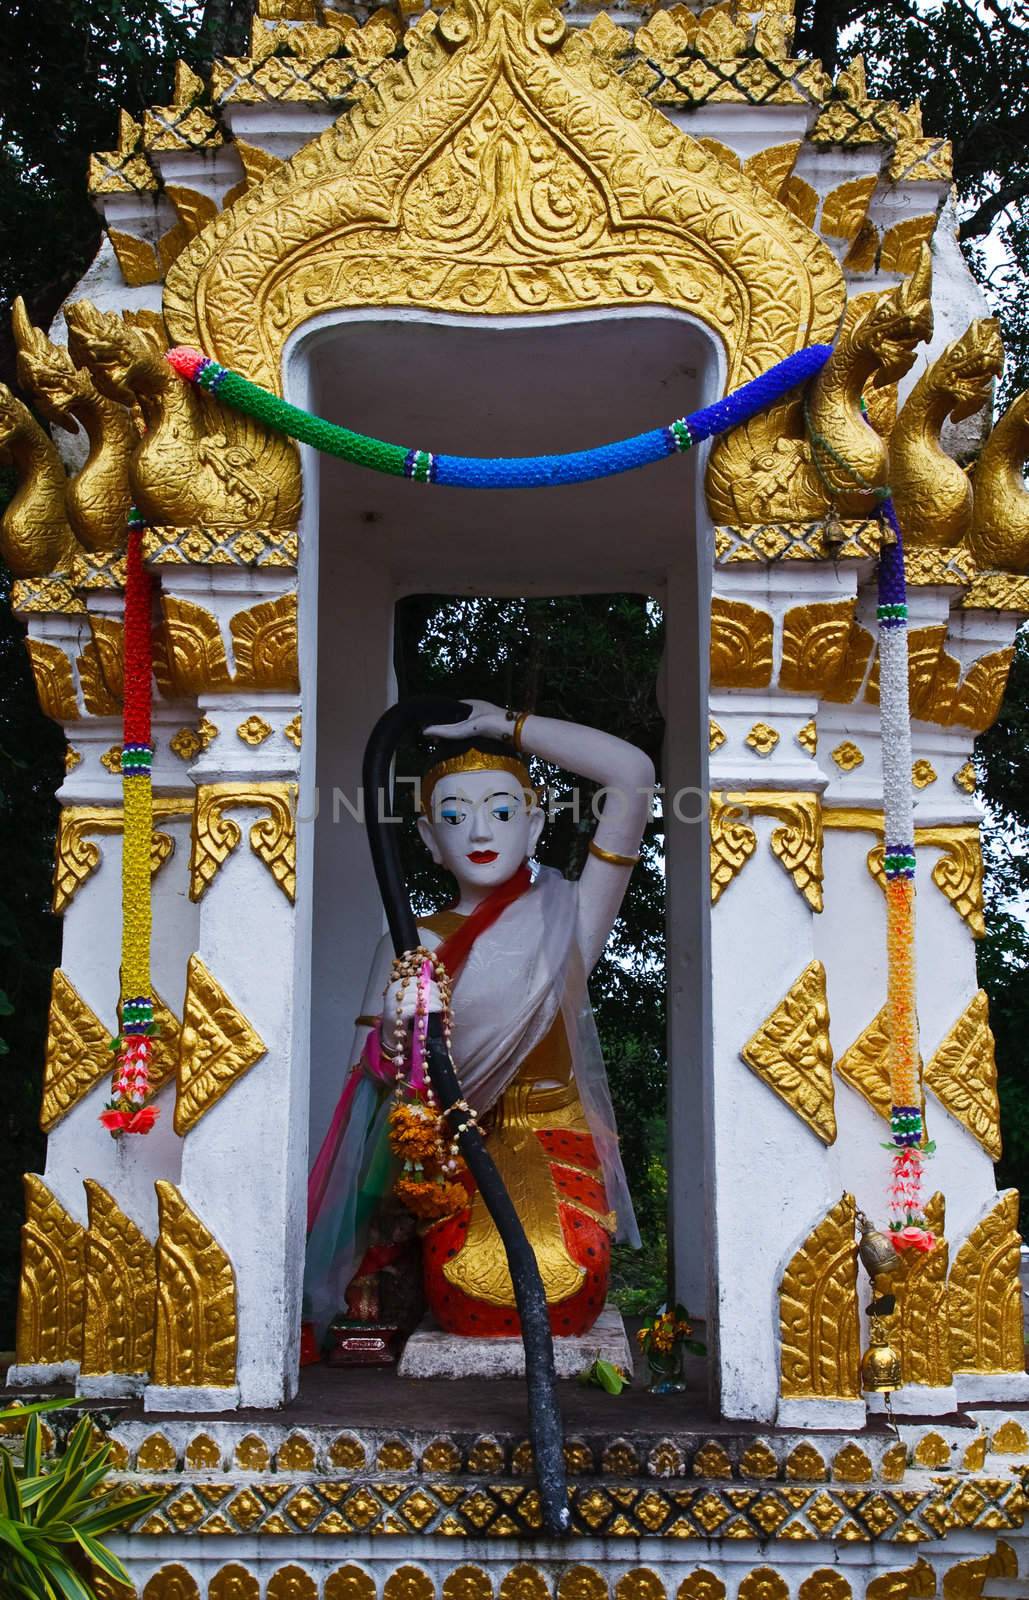 Earth's mom statue in Wat Doi Suthep, Chiang Mai.